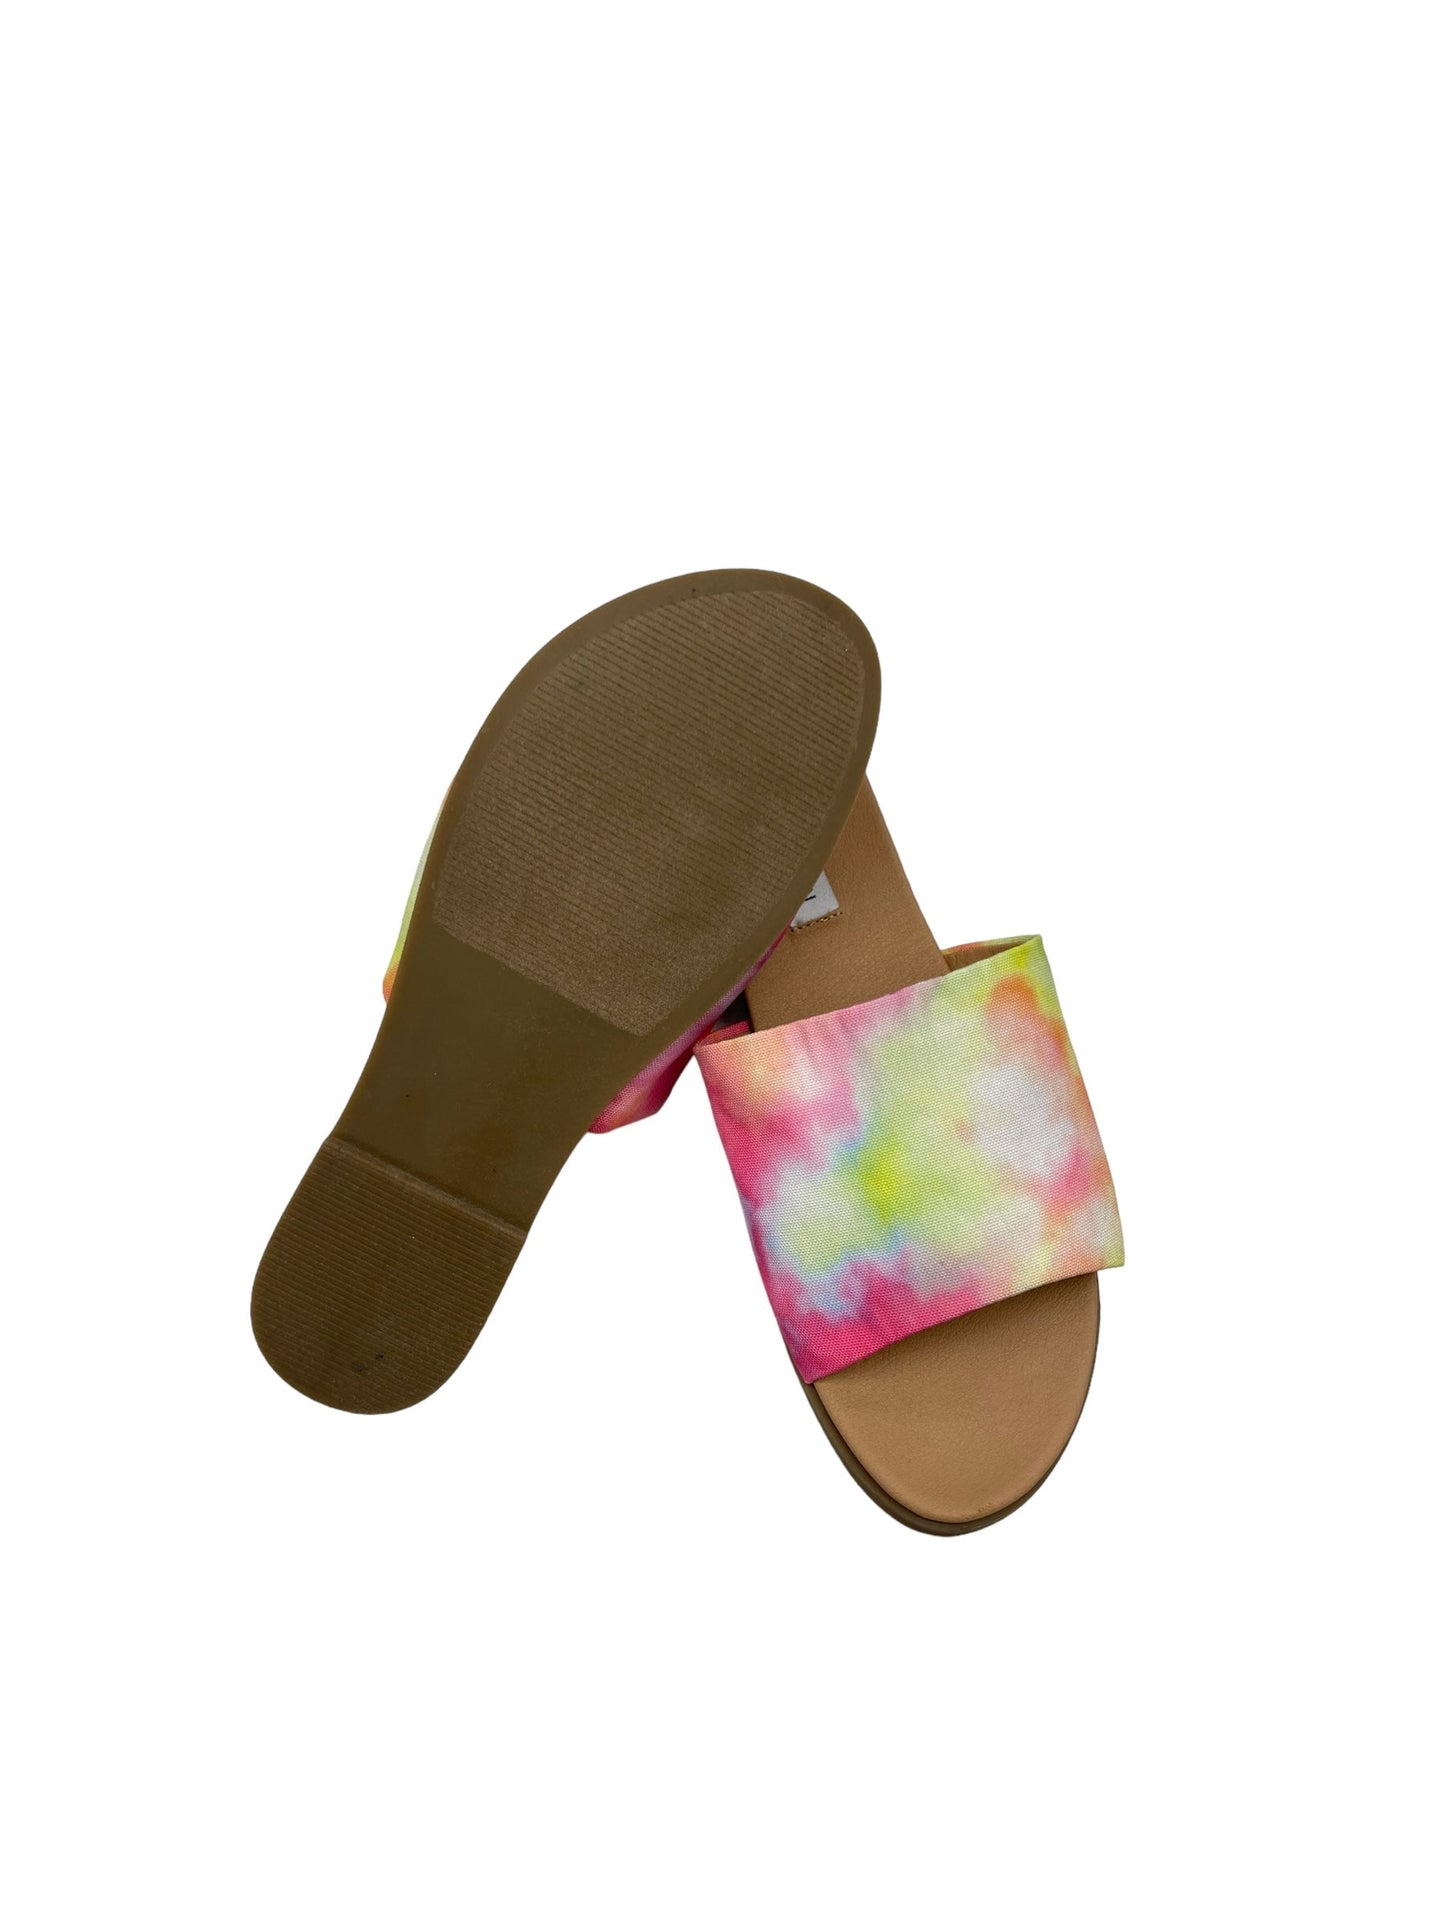 Tie Dye Print Sandals Flip Flops Steve Madden, Size 7.5